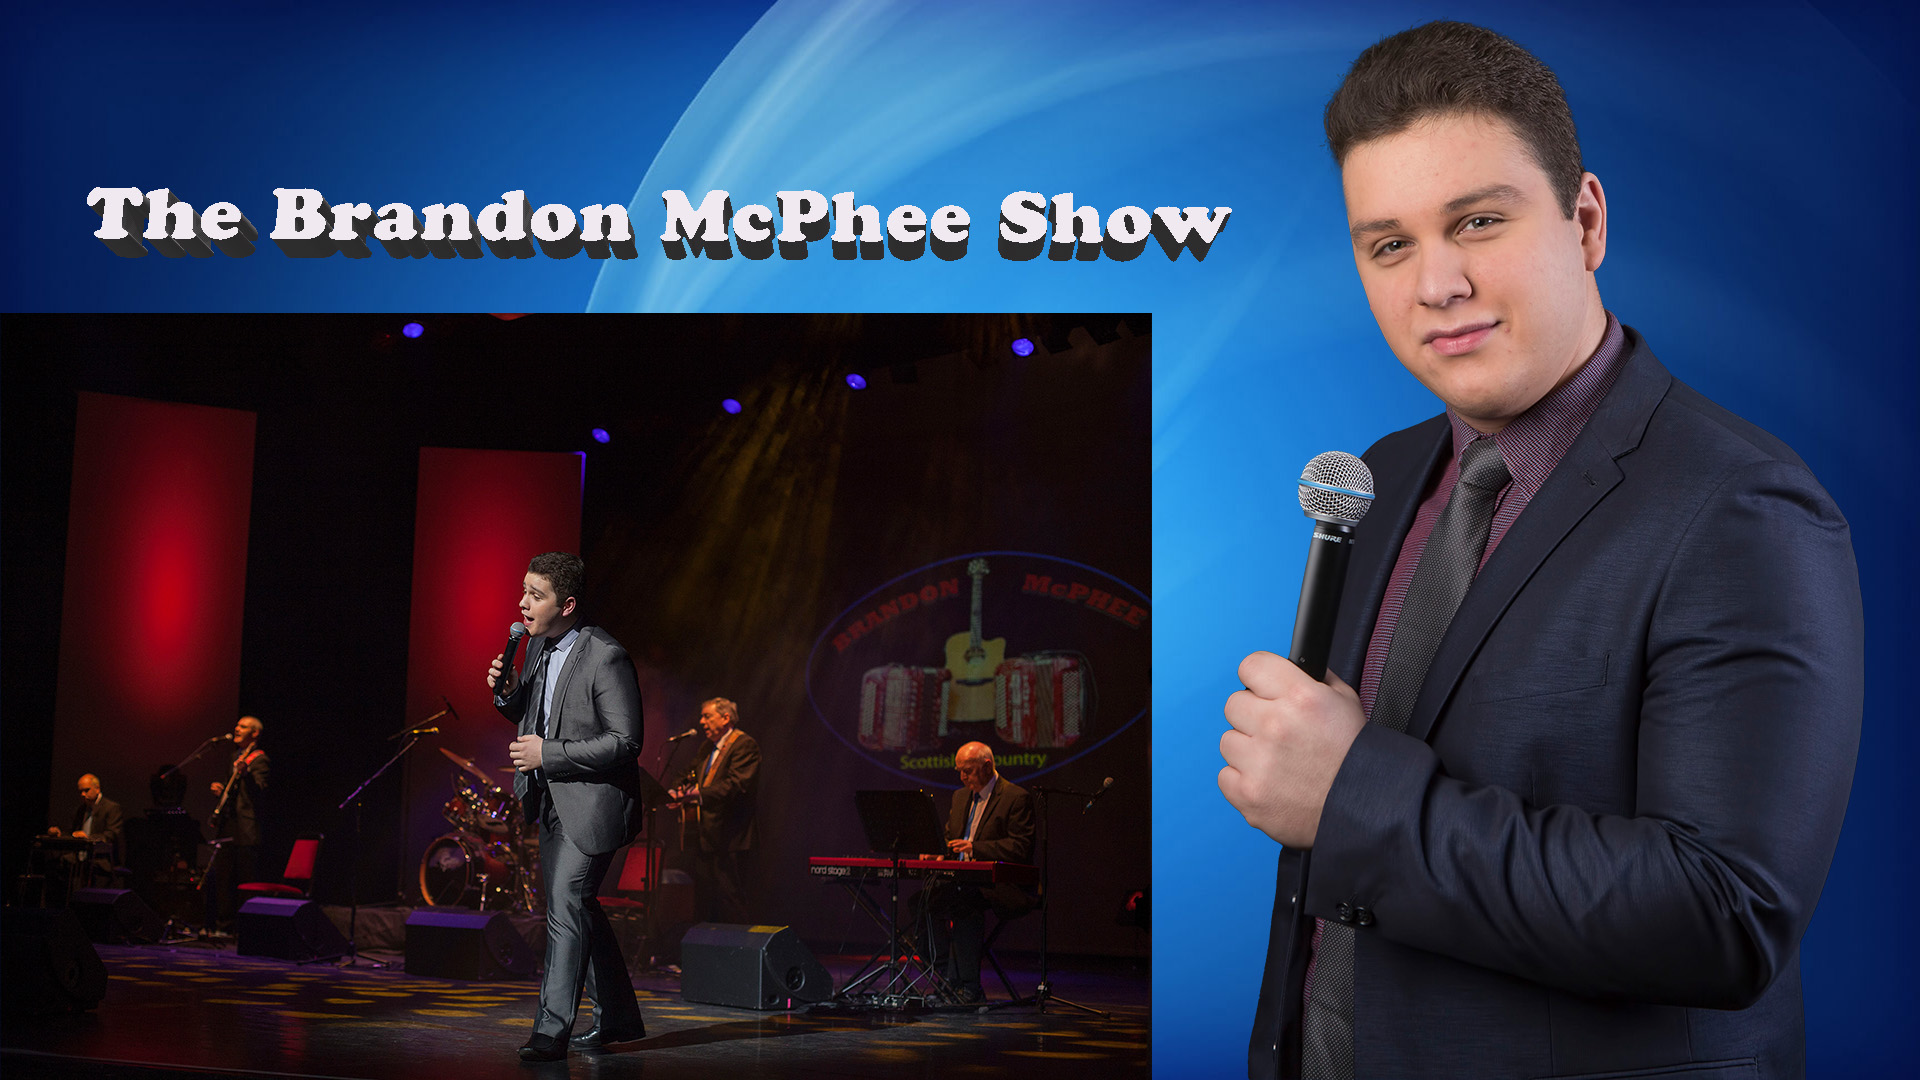 The Brandon McPhee Show